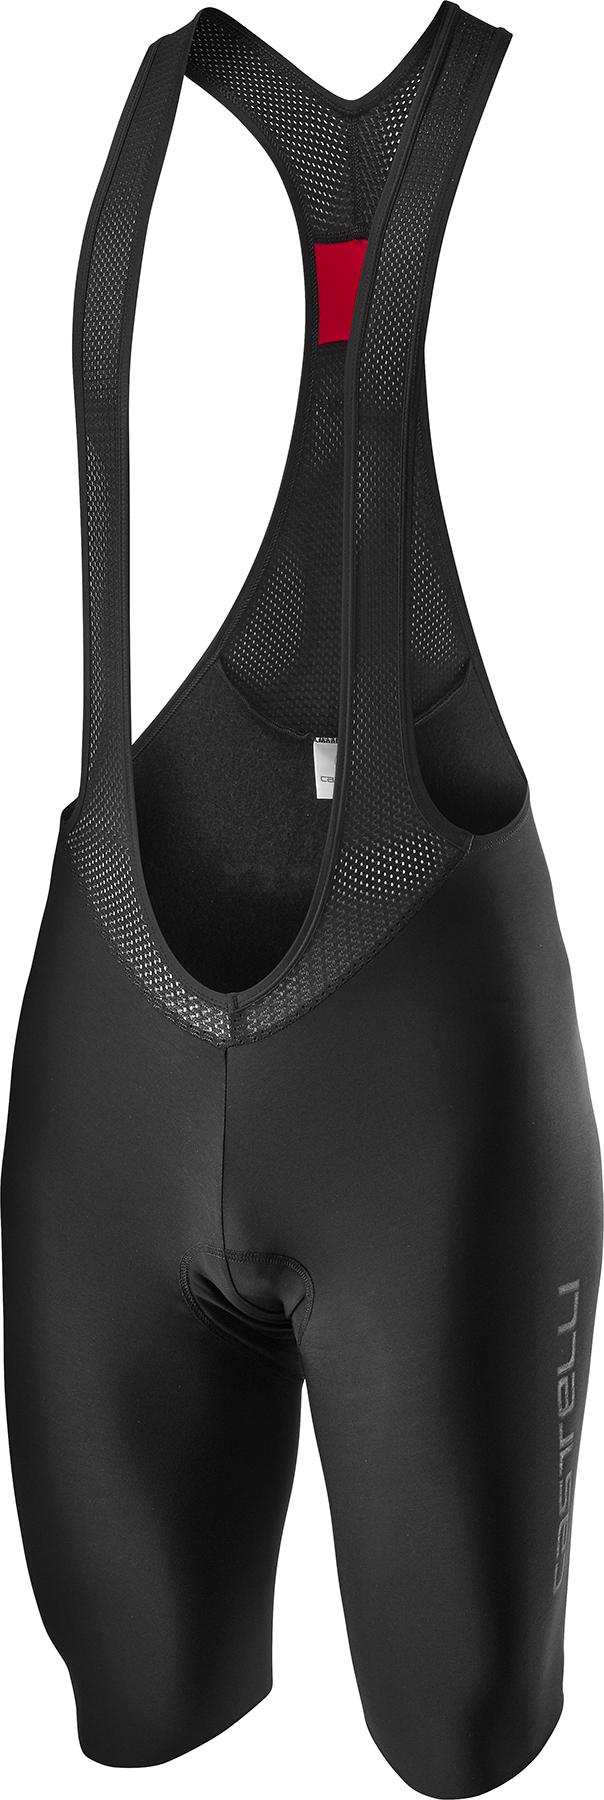 Castelli Nano Flex Pro Race Bib Shorts - Black